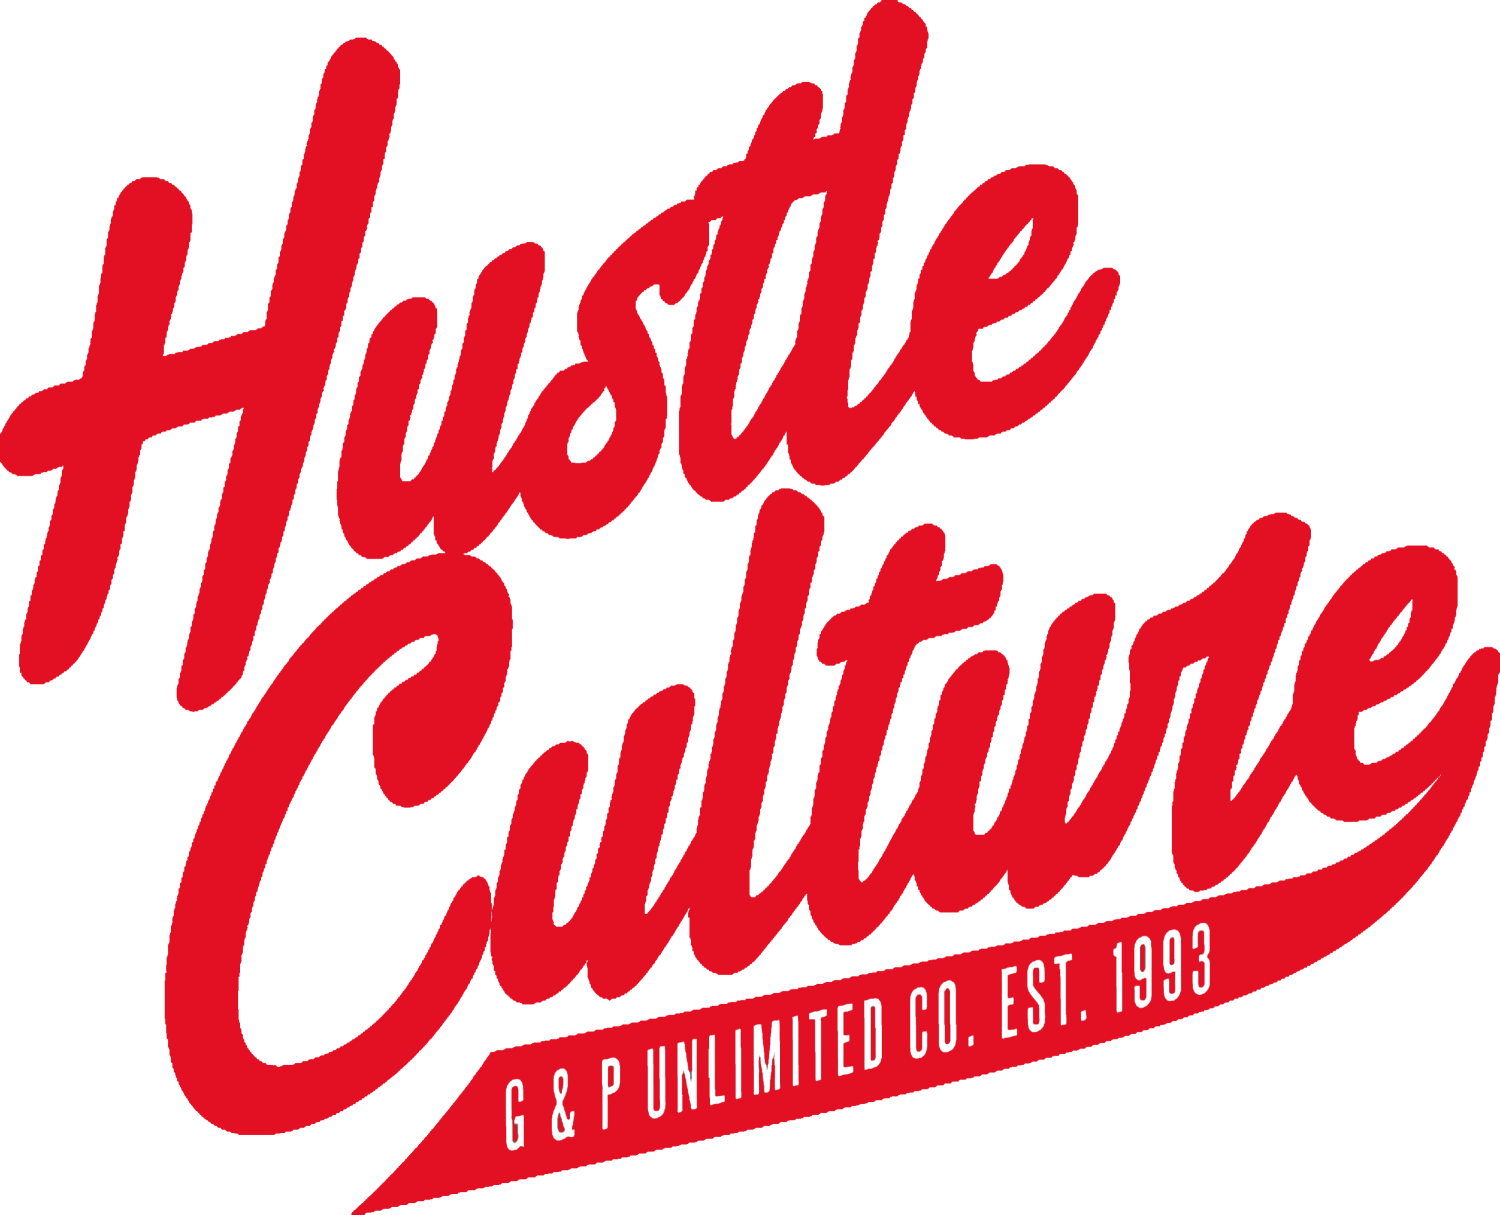 Hustle Culture Co. 